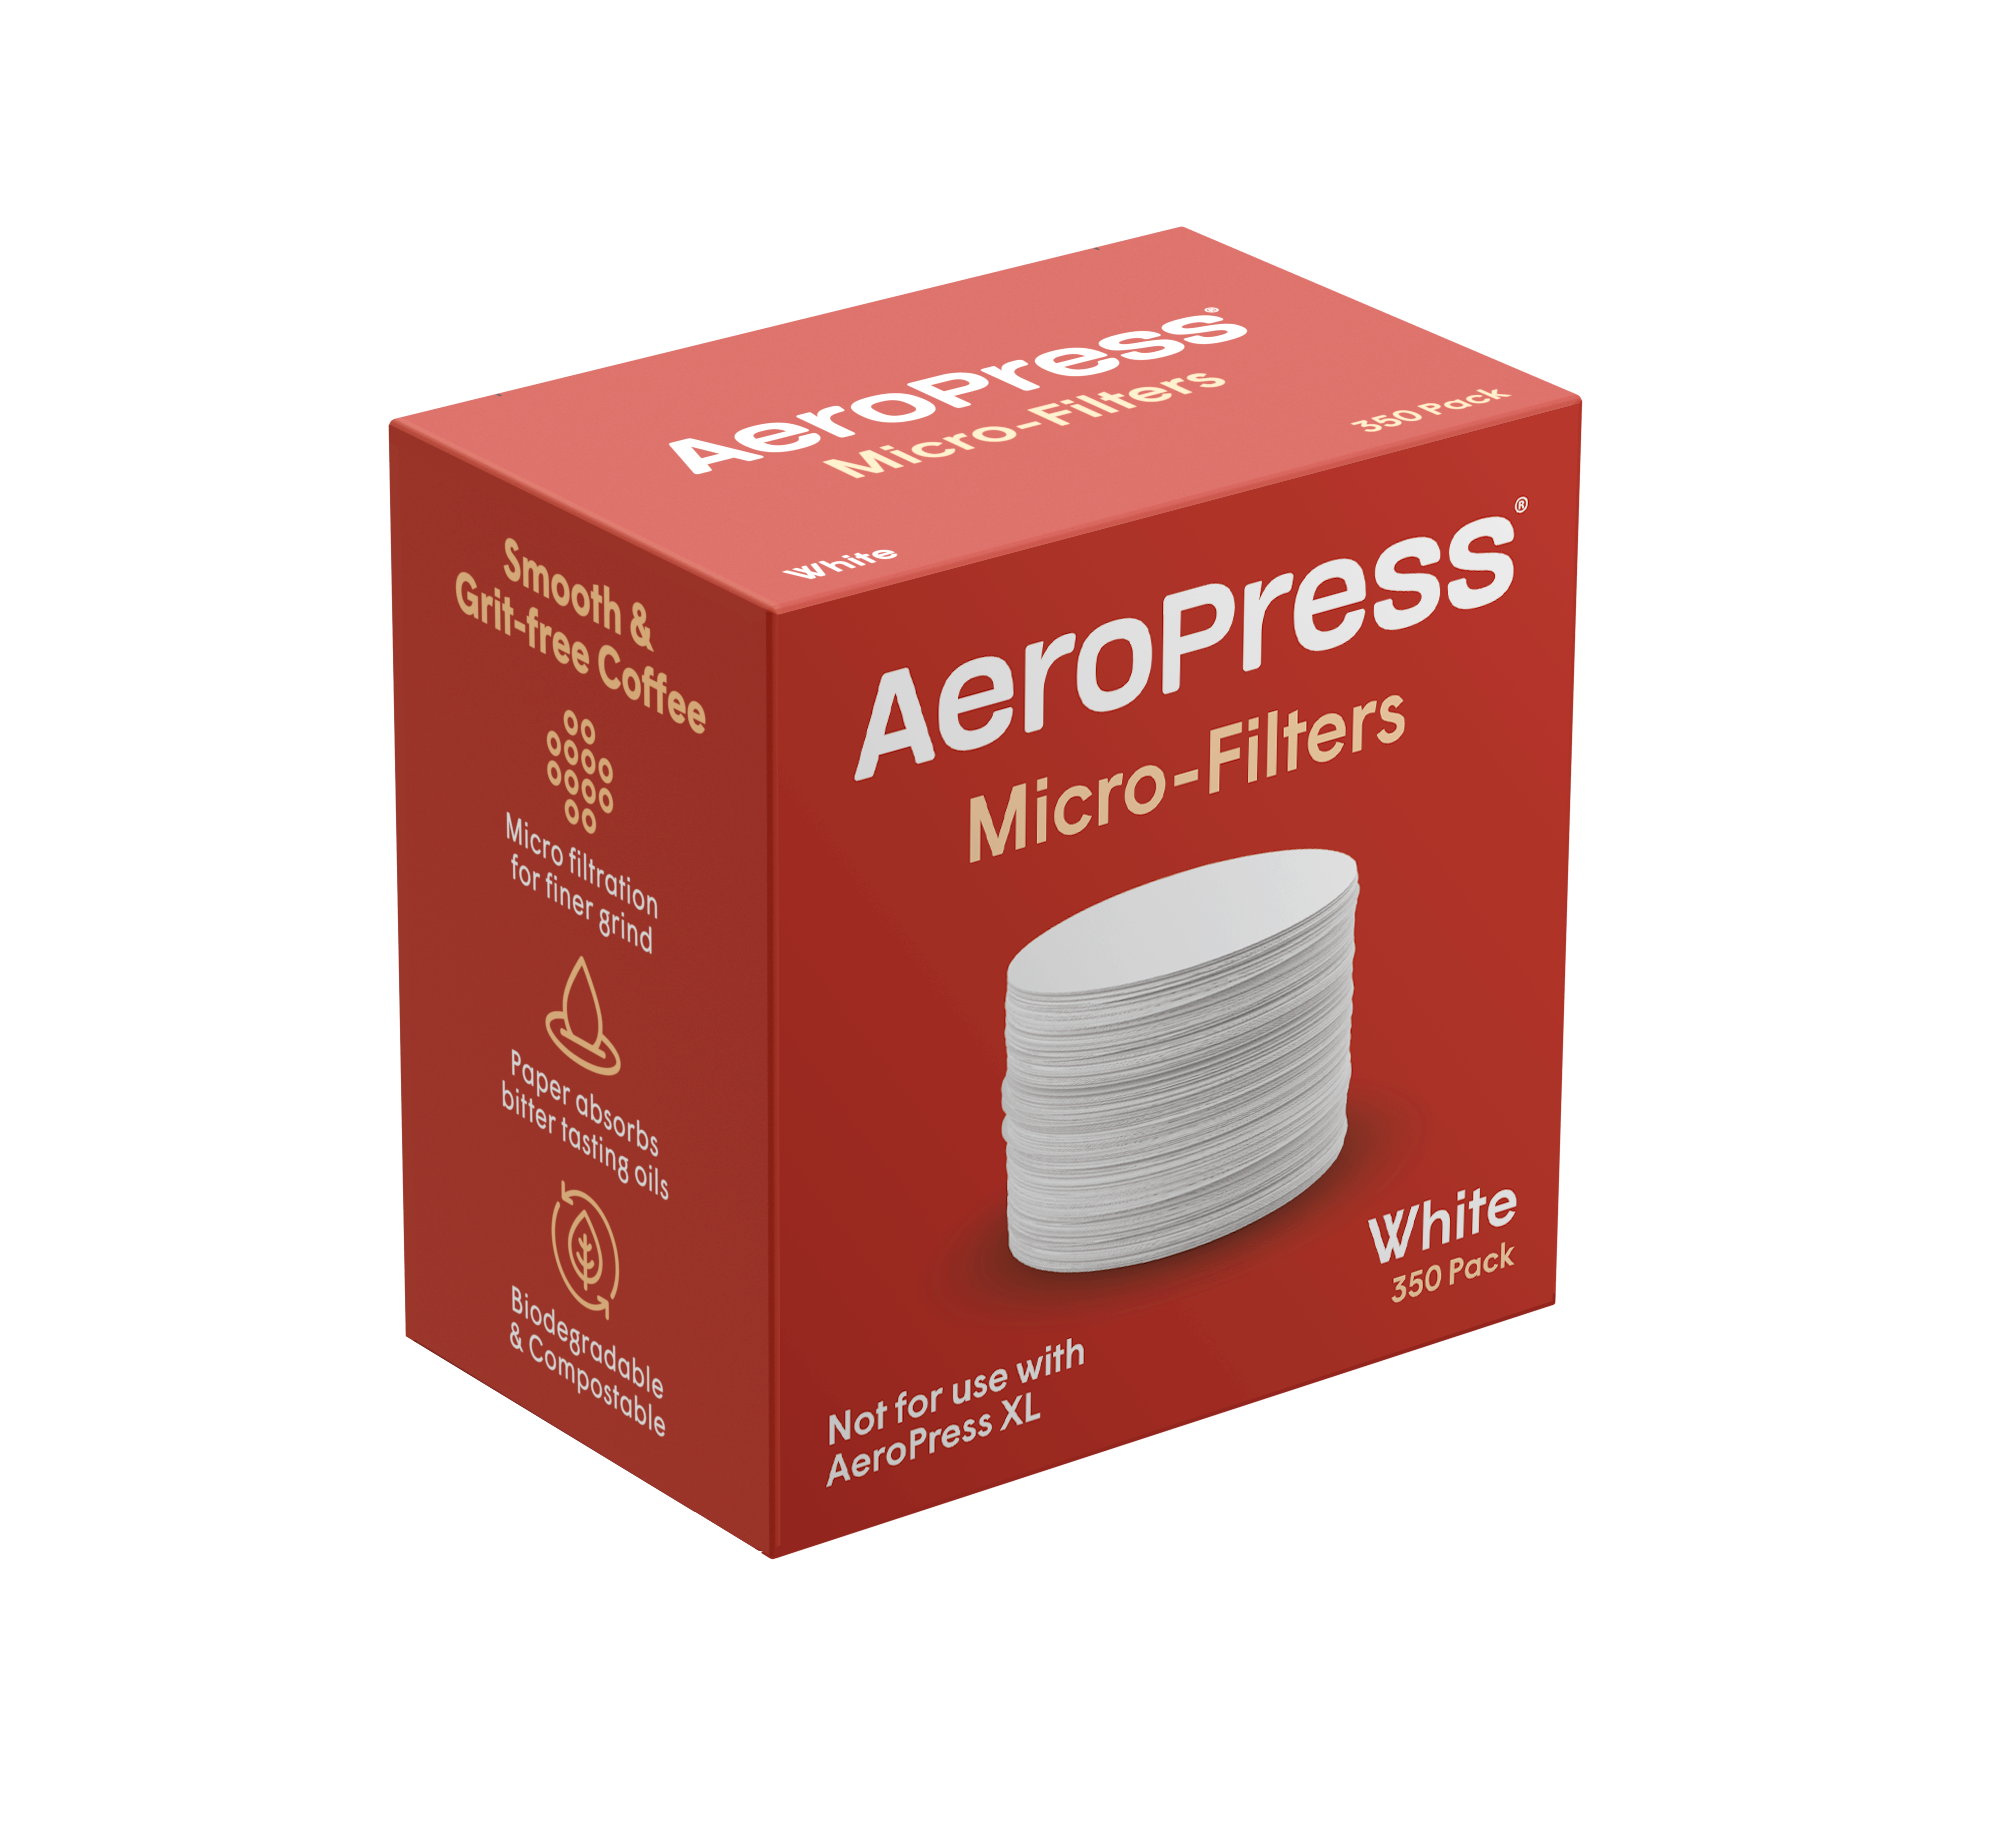 AeroPress Micro Filters